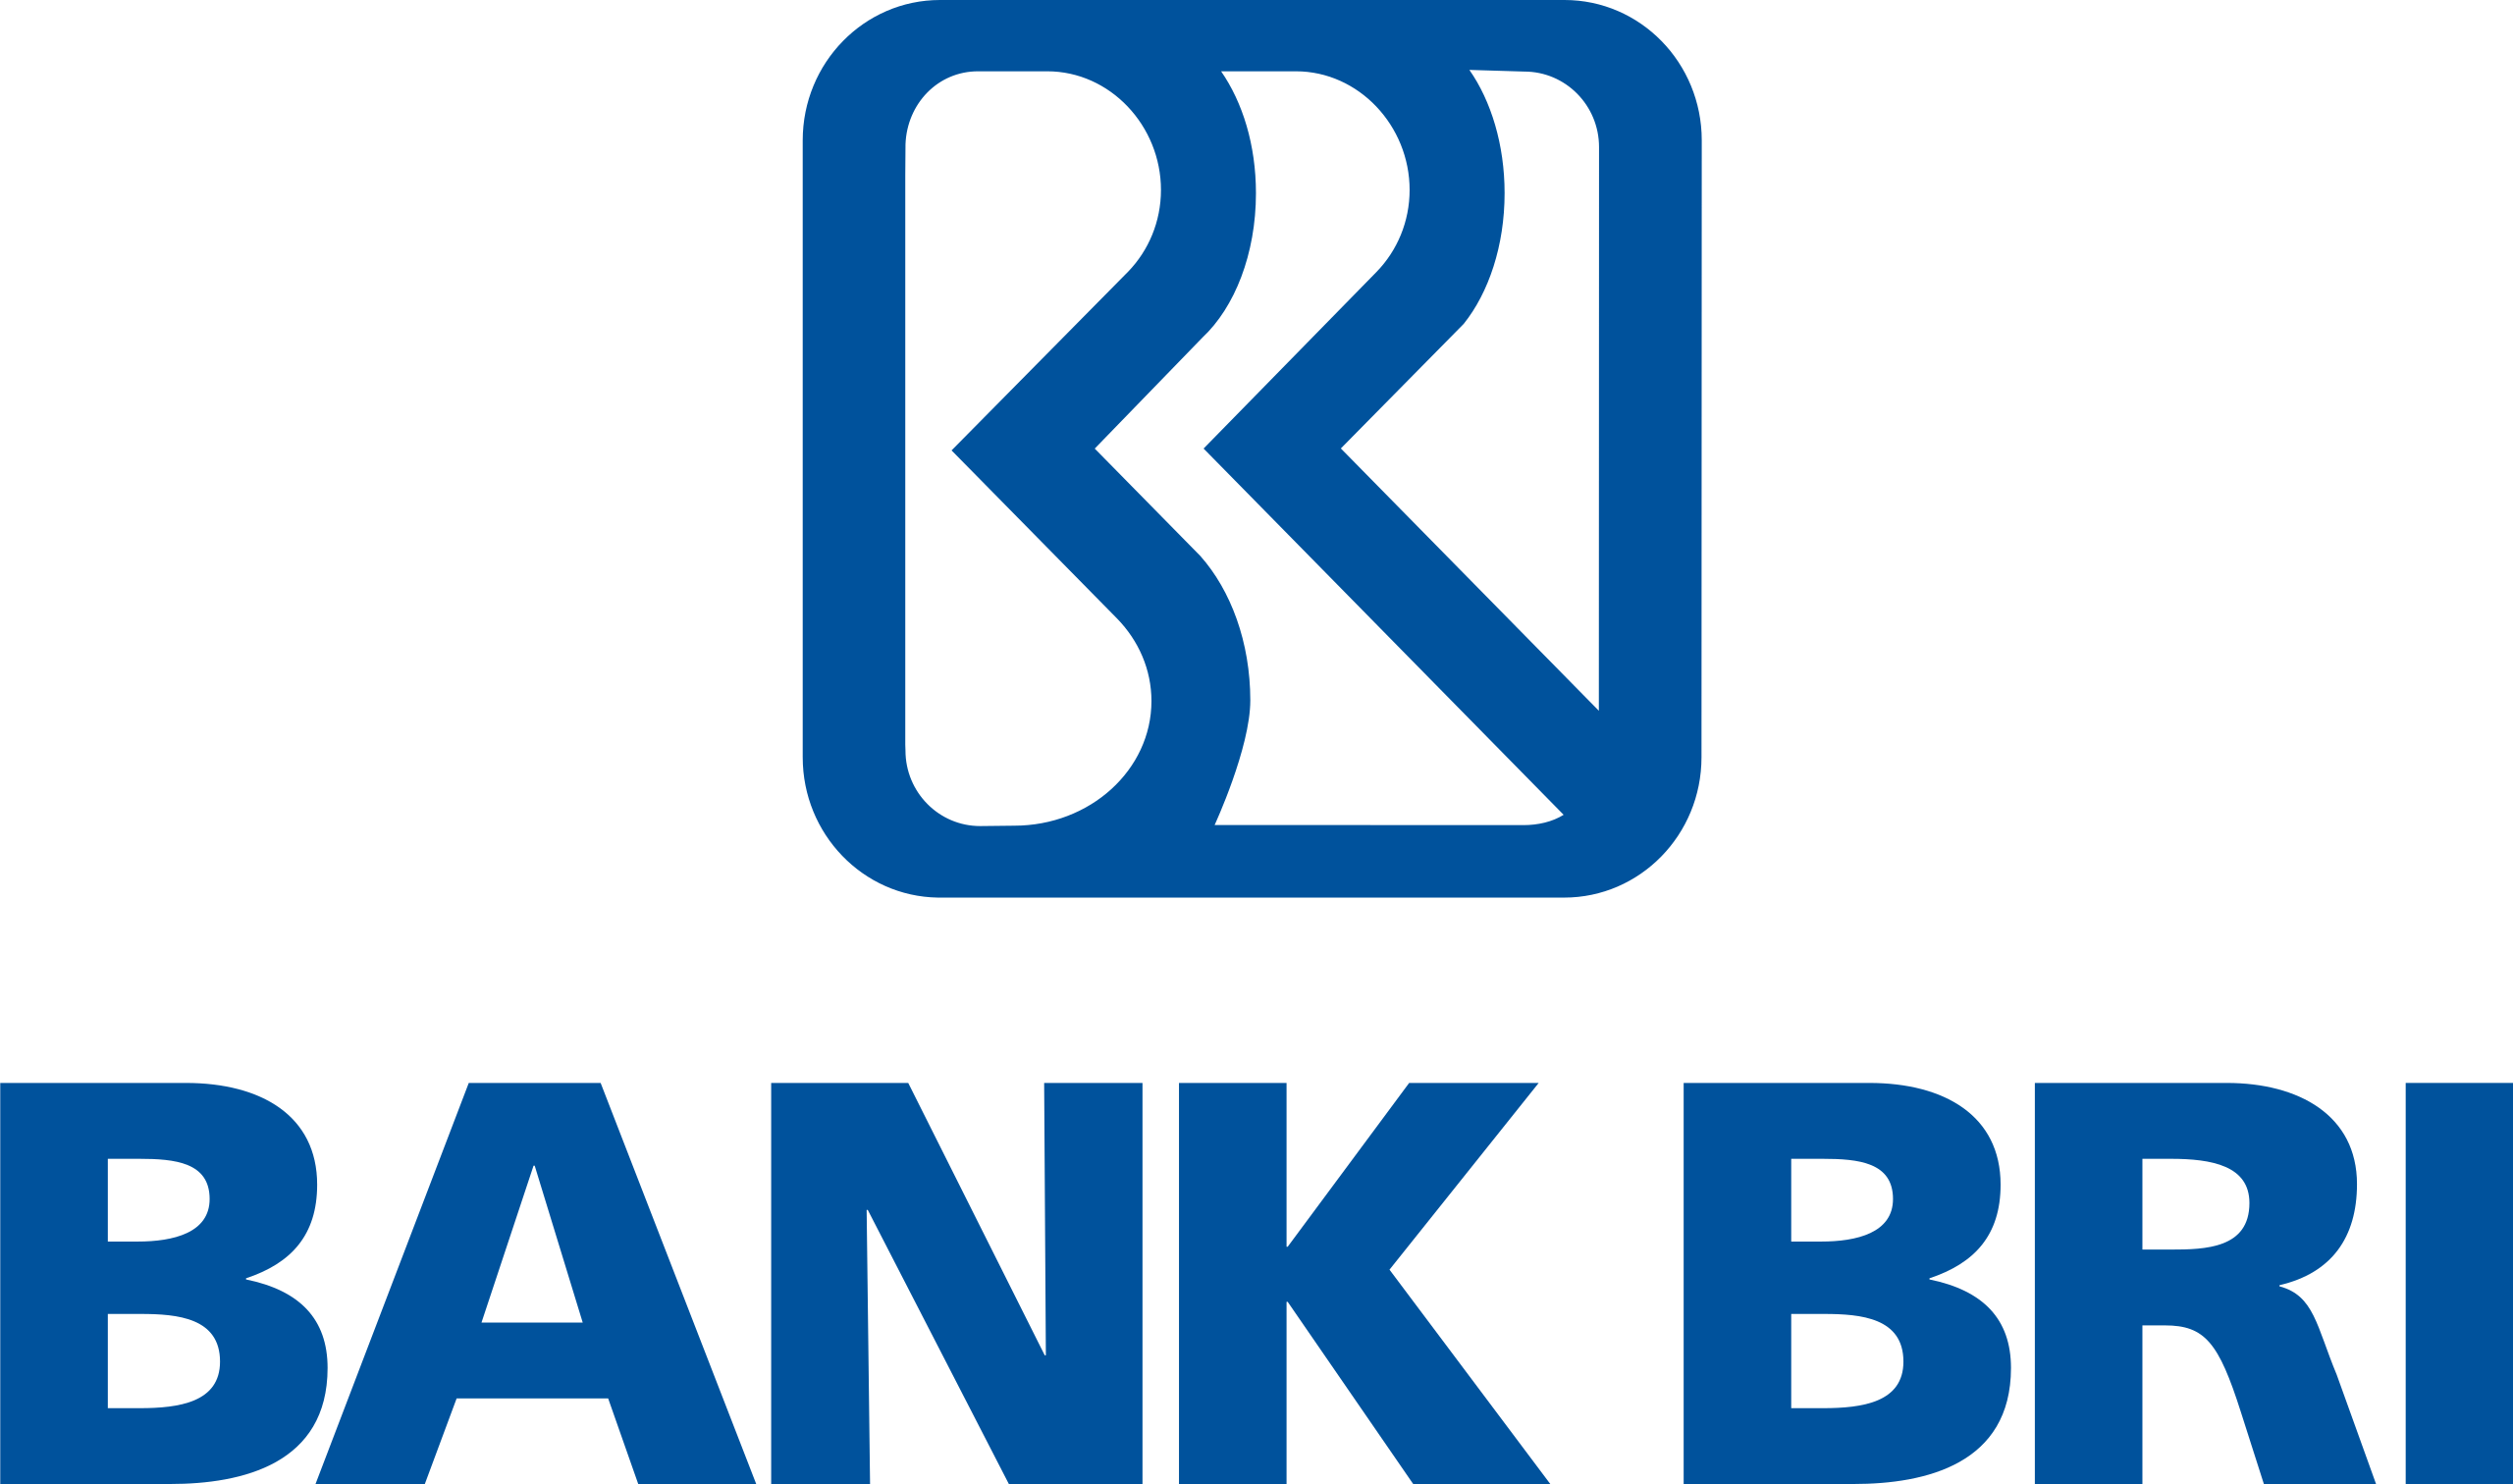 BANK_BRI_logo_(vertical).svg